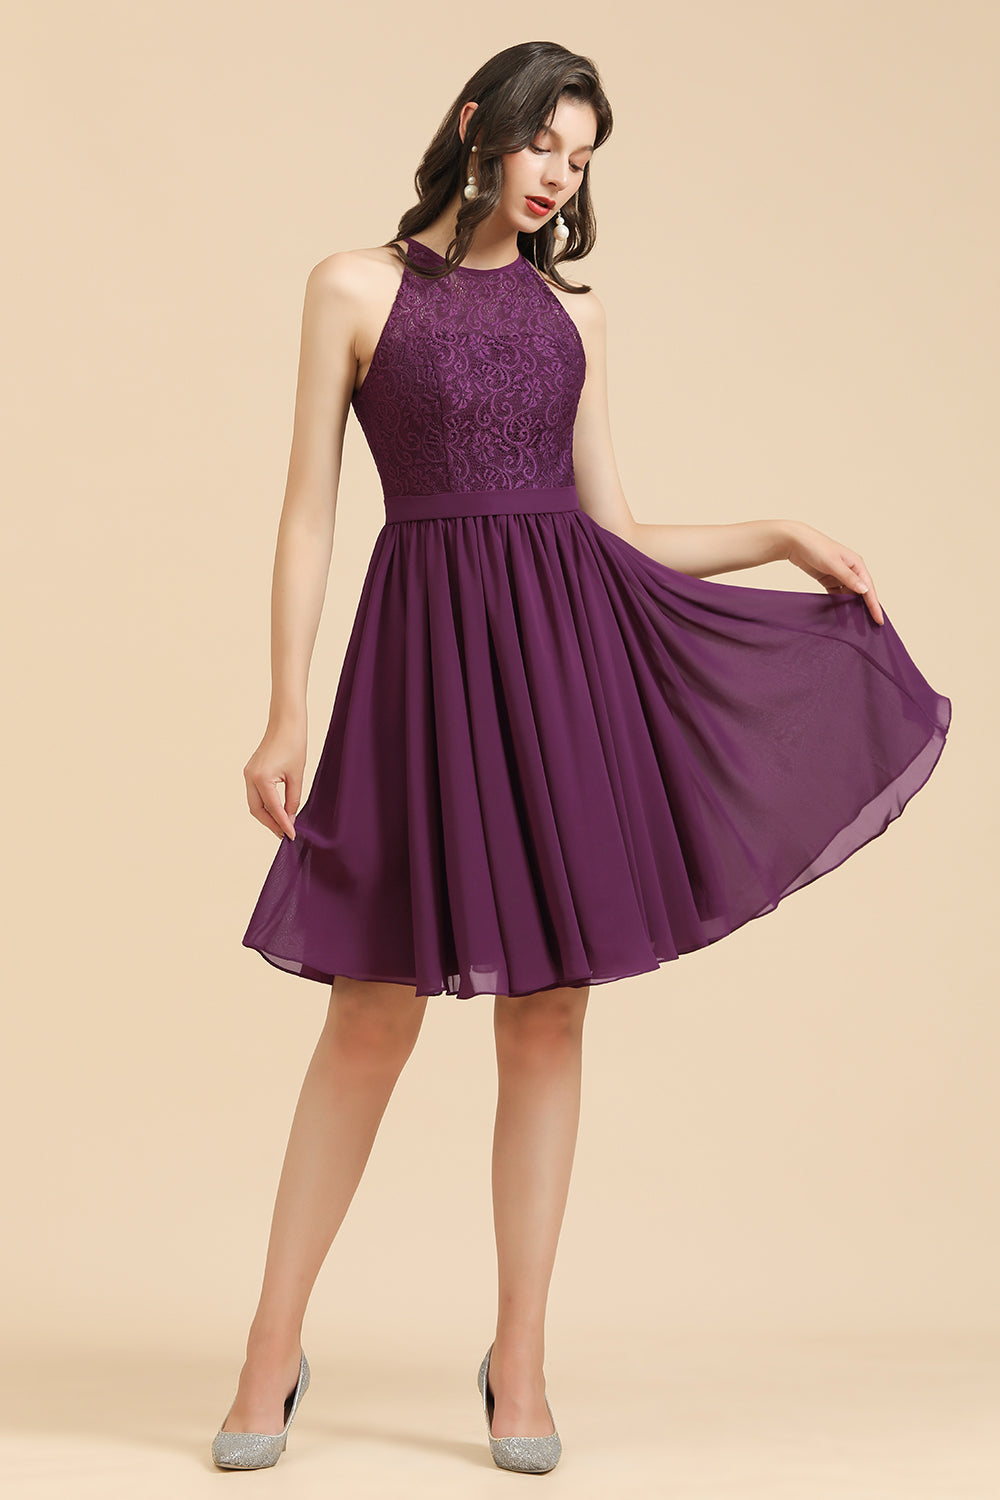 Halter Lace Bridesmaid Dress Chiffon Sleeveless Short Dress-27dress